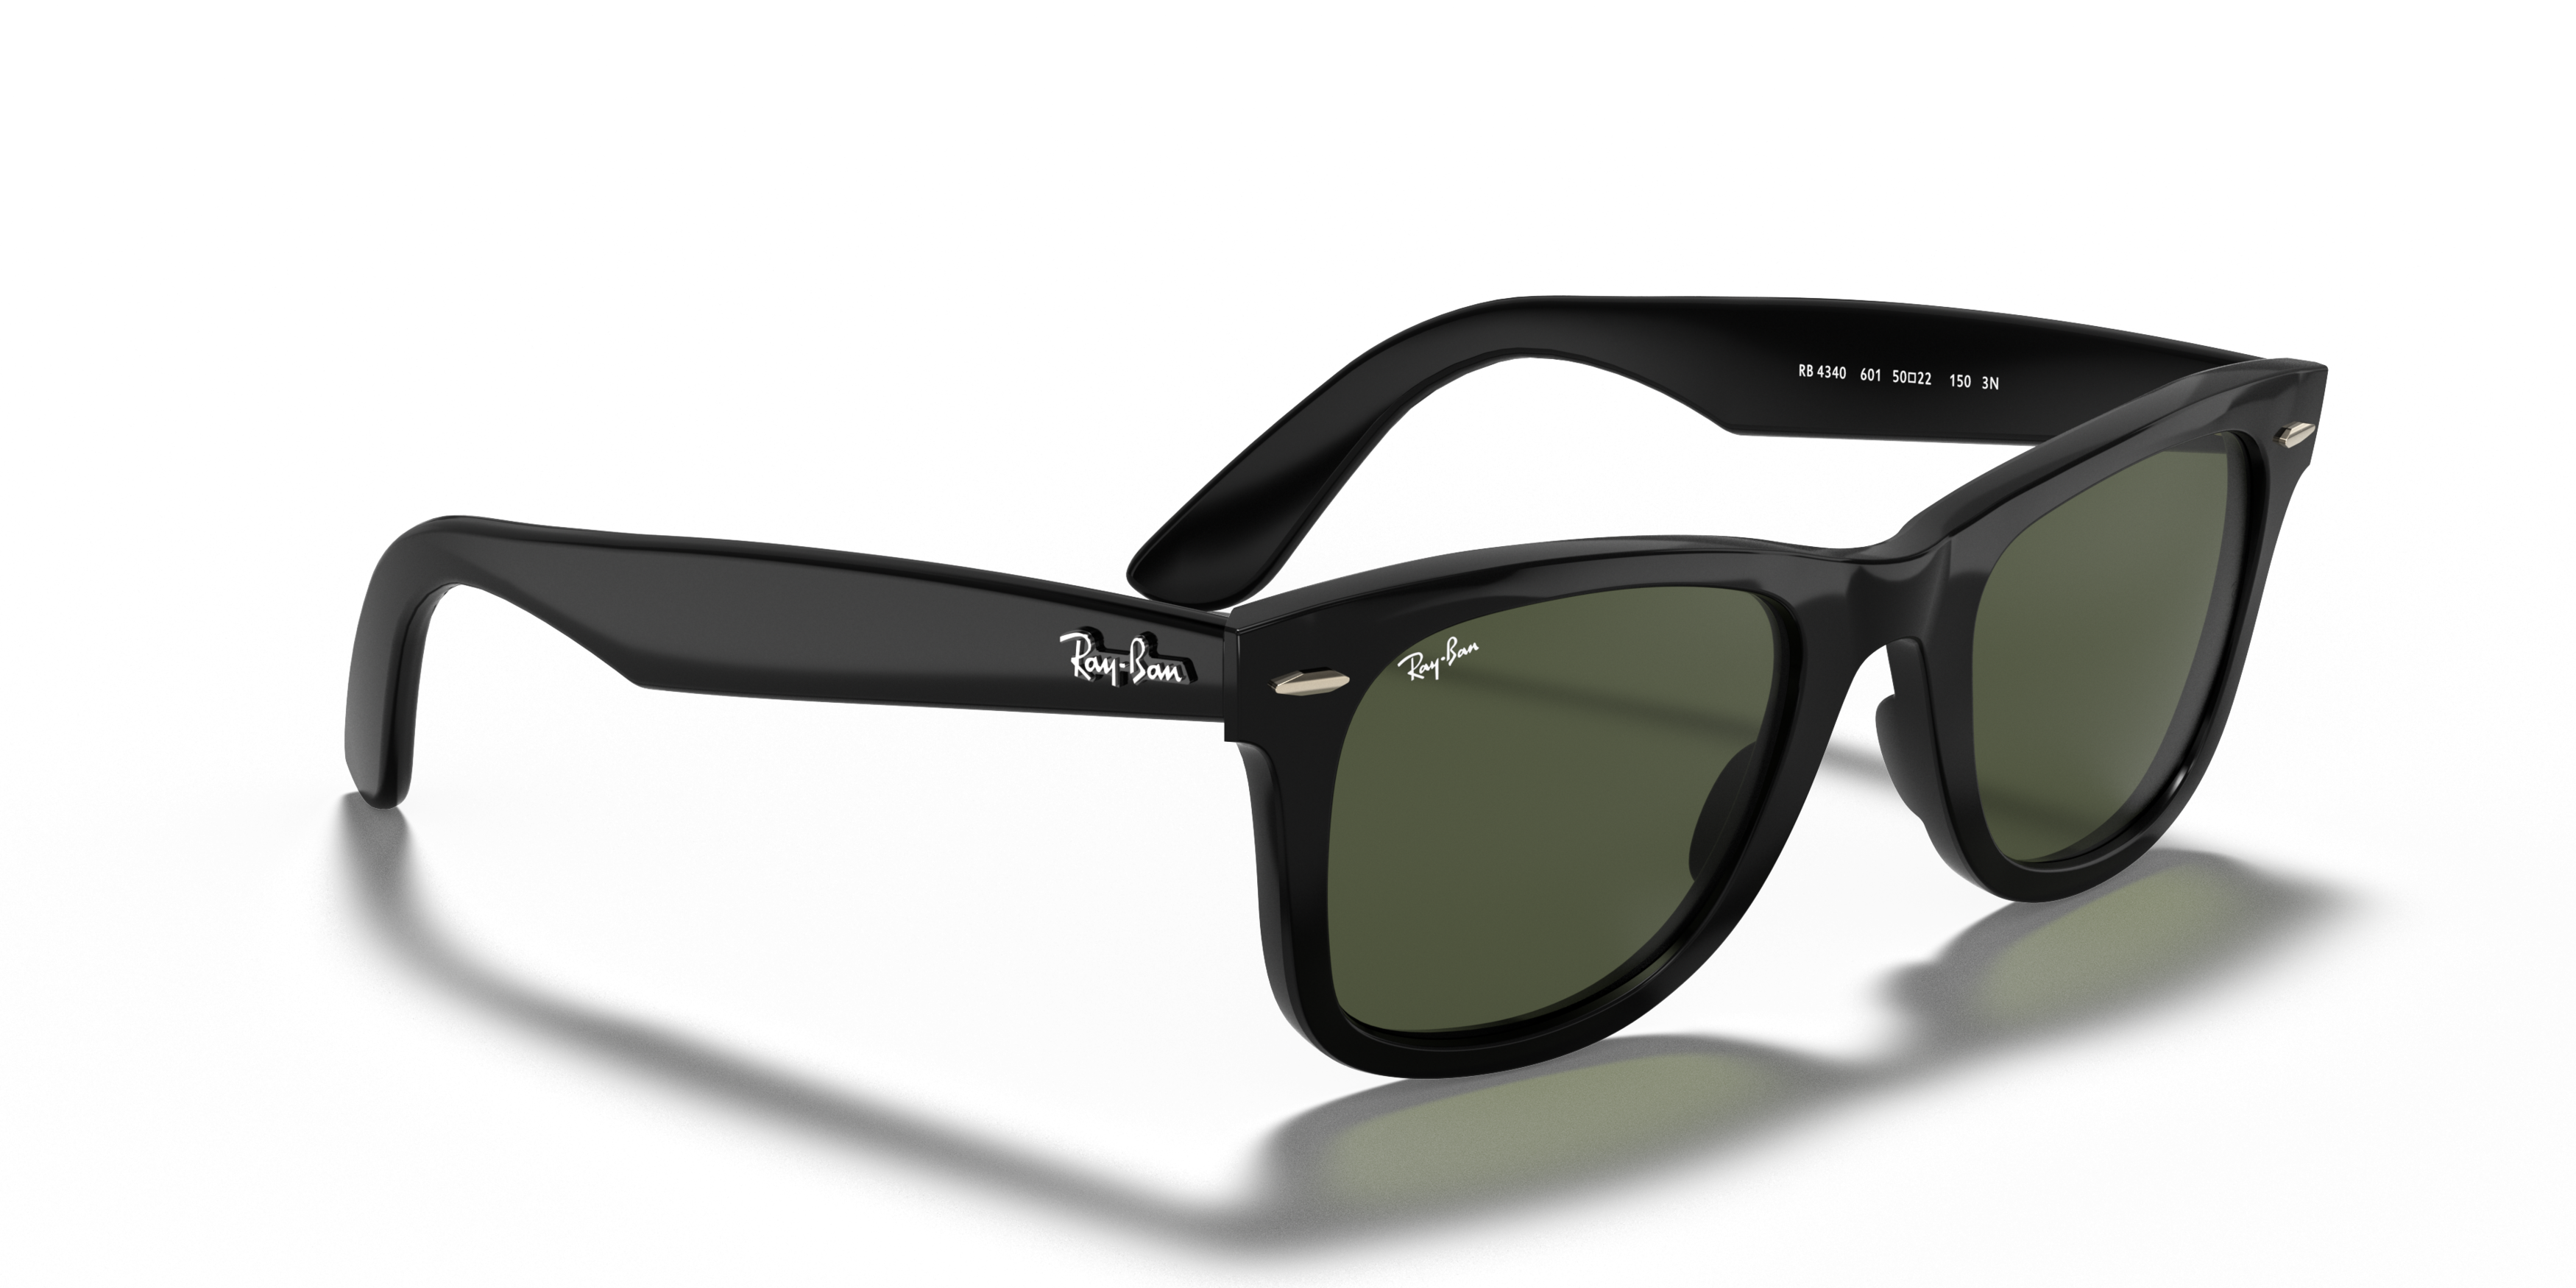 Angle_Right01 Ray-Ban Wayfarer Ease RB 4340 (601) Sunglasses Green / Black